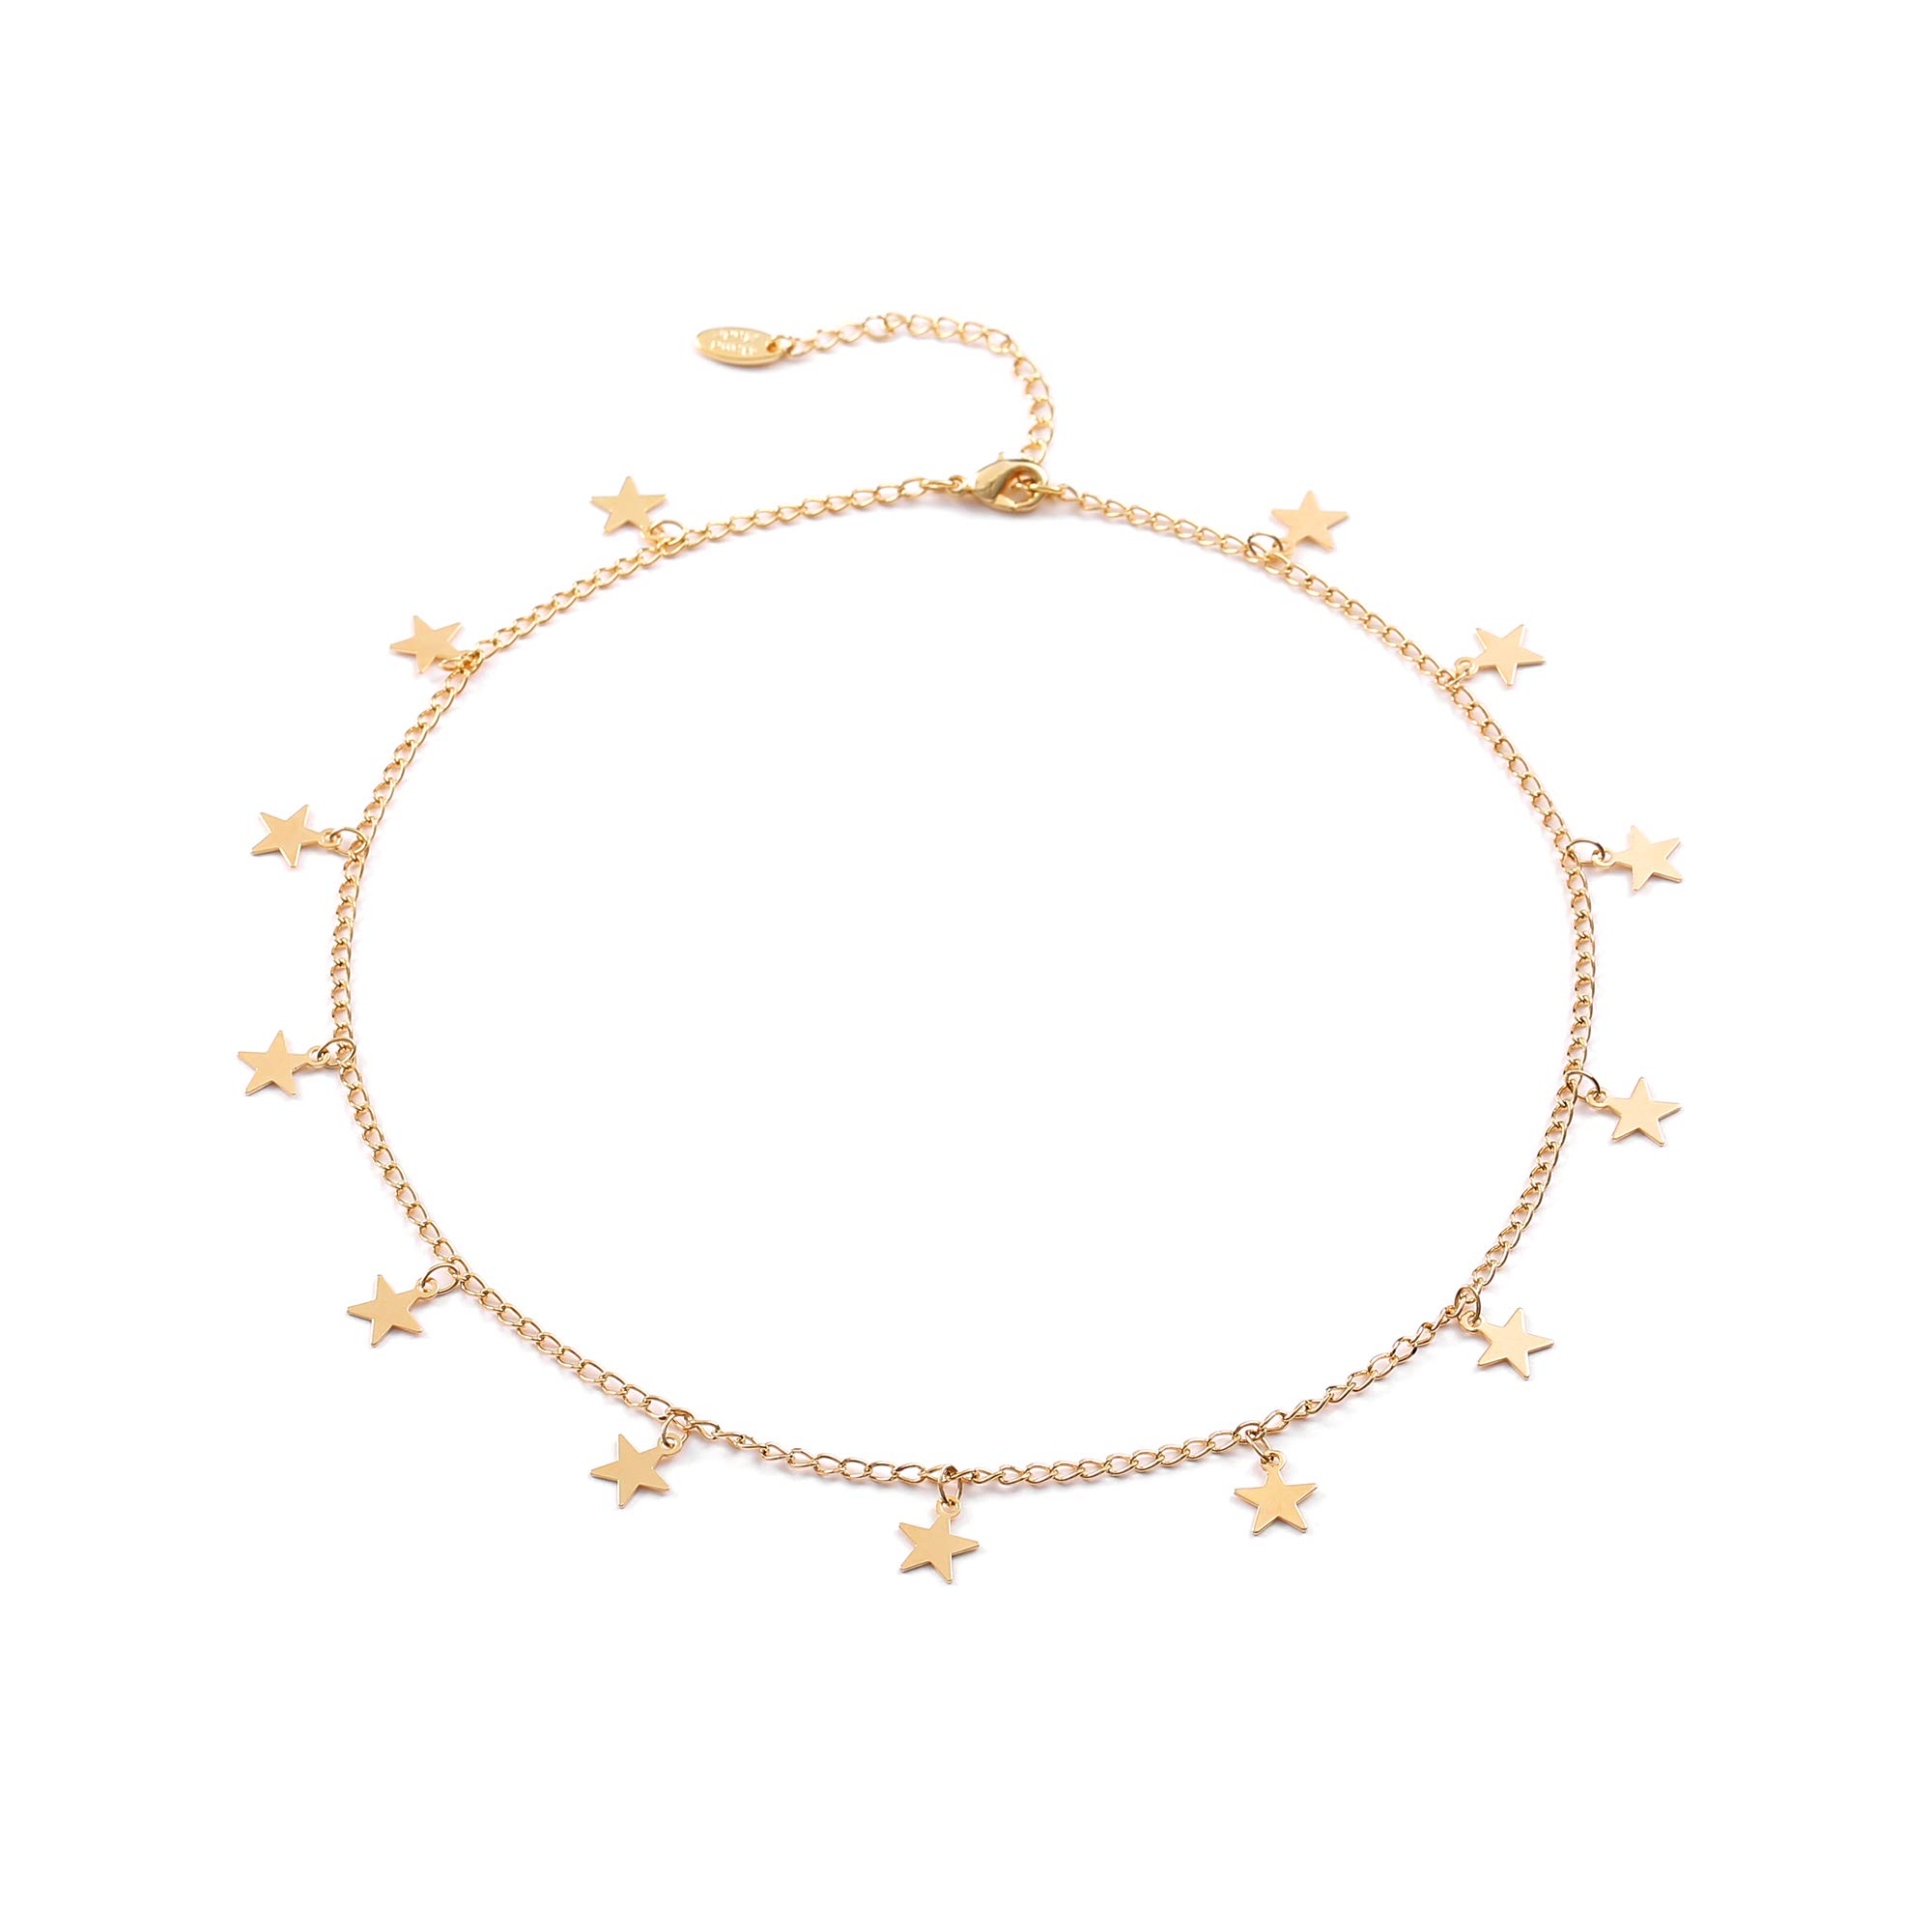 Fremttly Star Choker Necklaces Handmade Simple 14K Gold